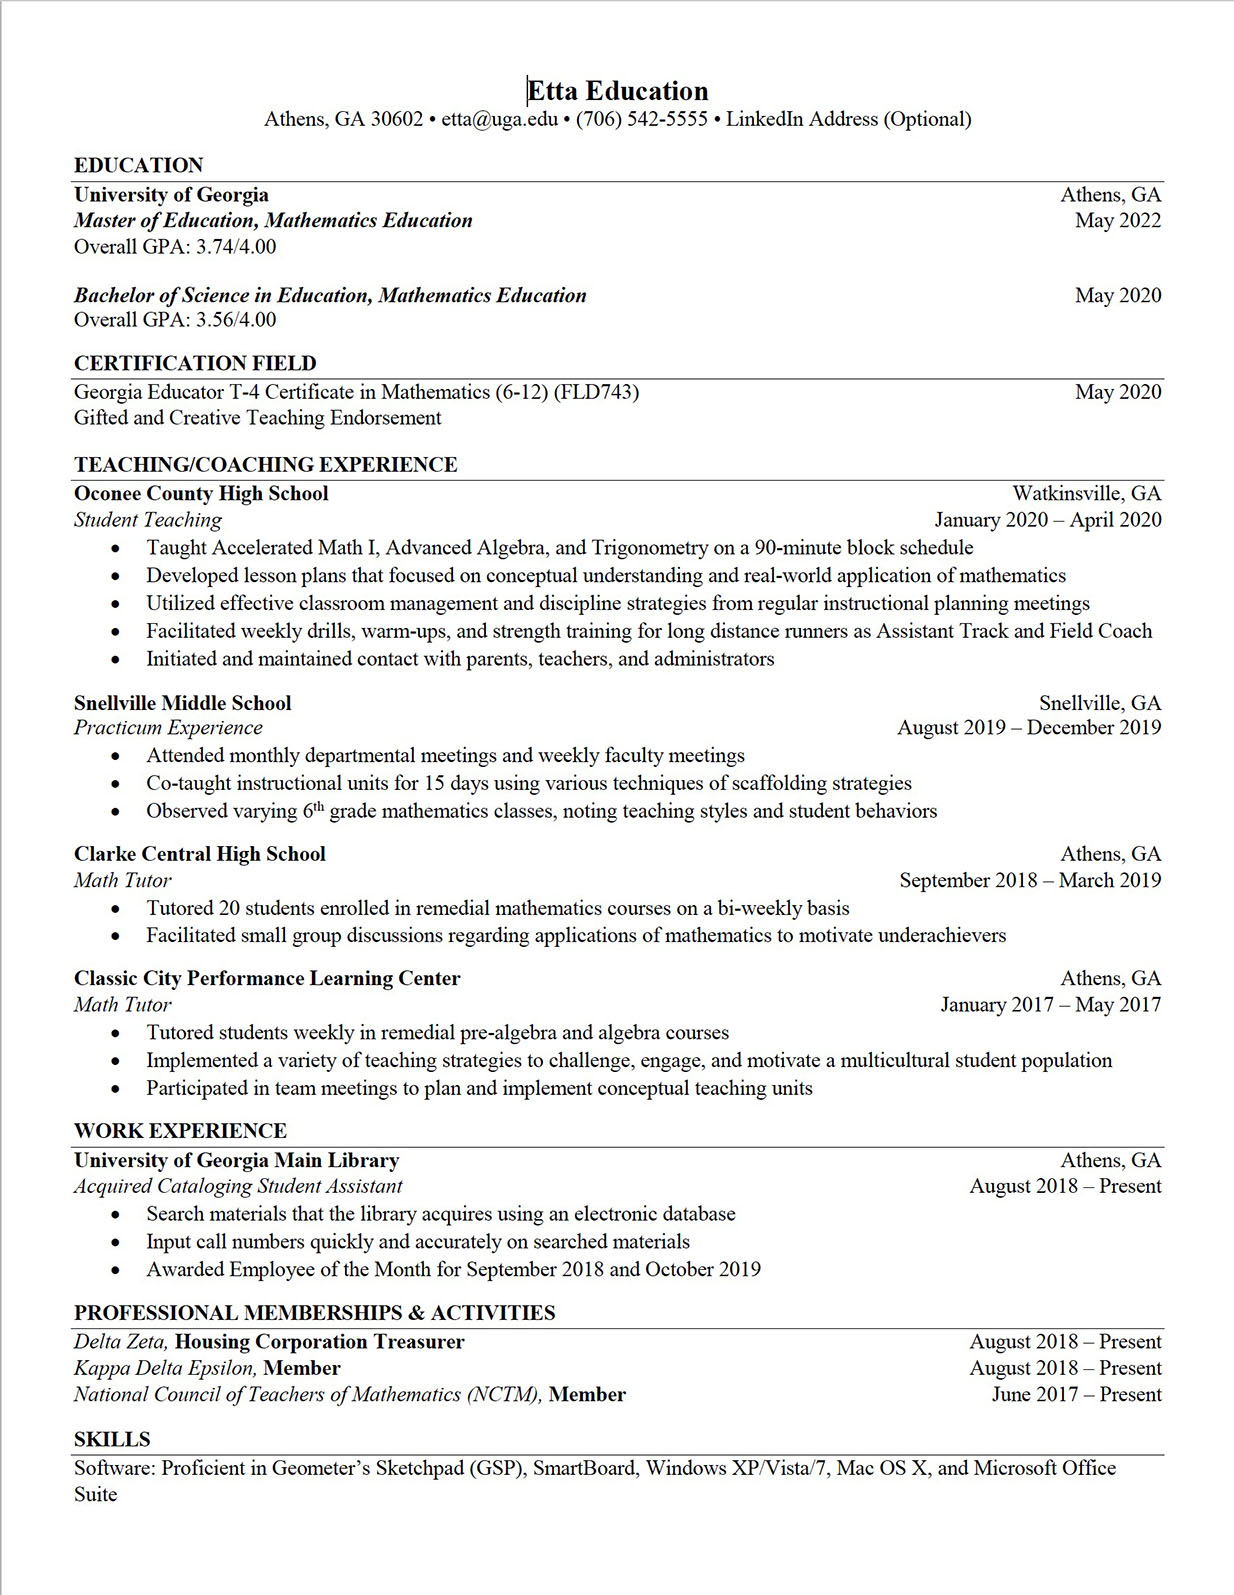 Education resume template